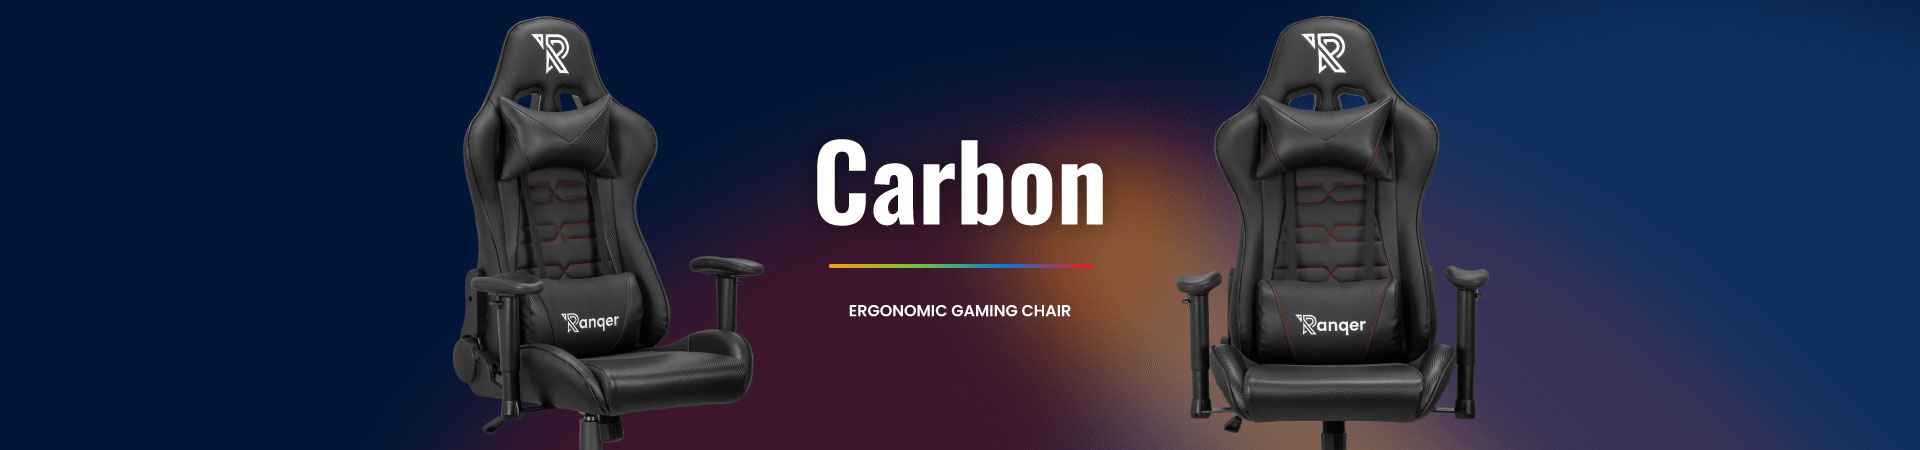 Ranqer Carbon gaming chair